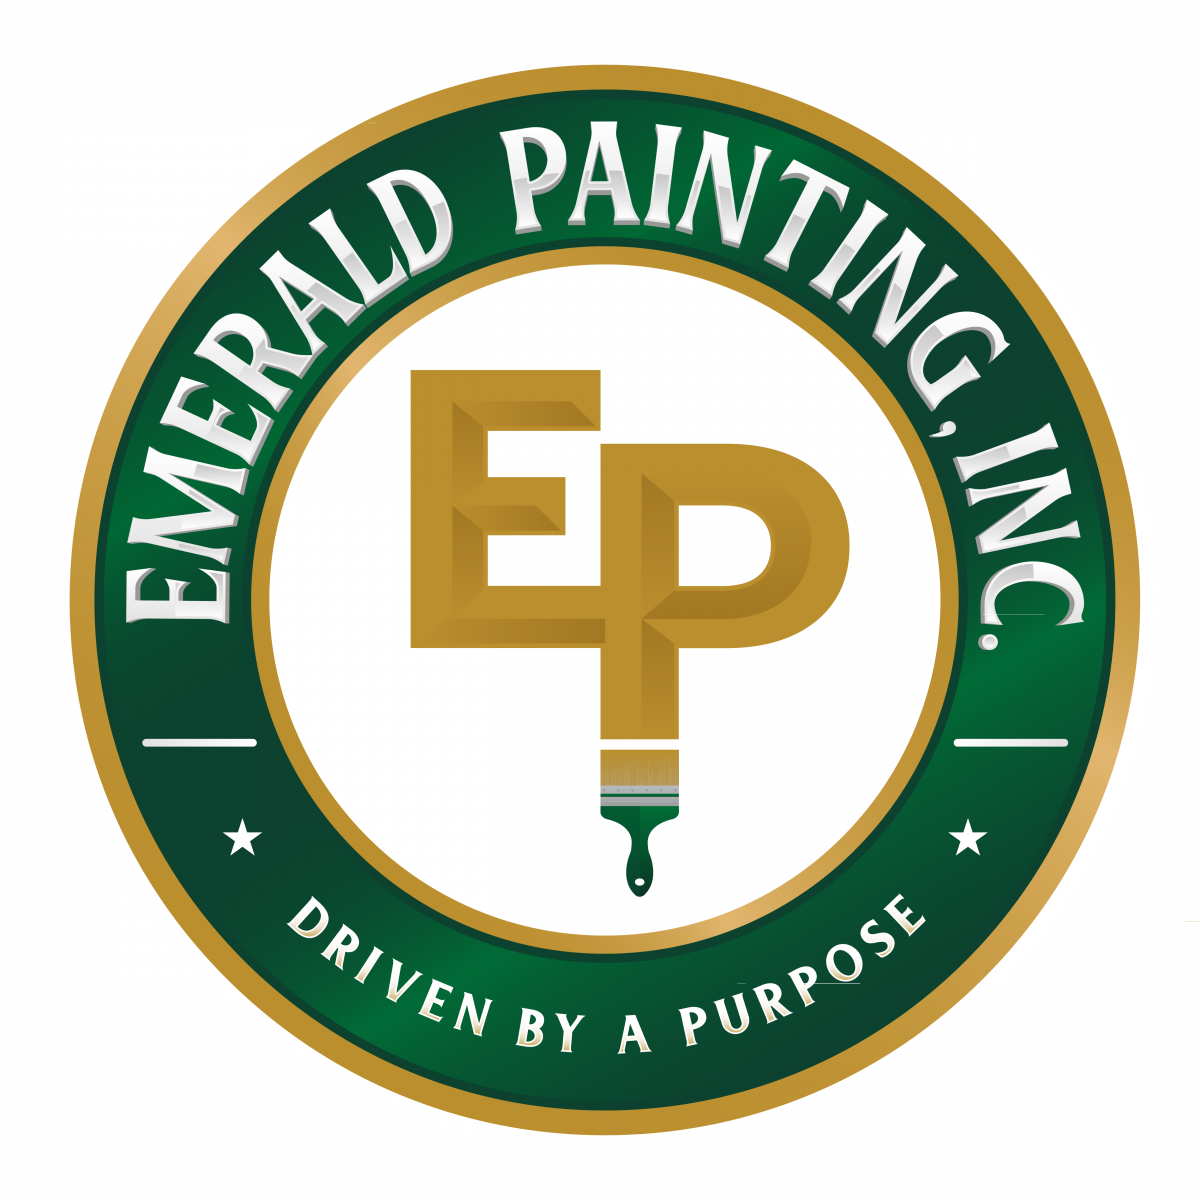 Emerald Painting Inc.